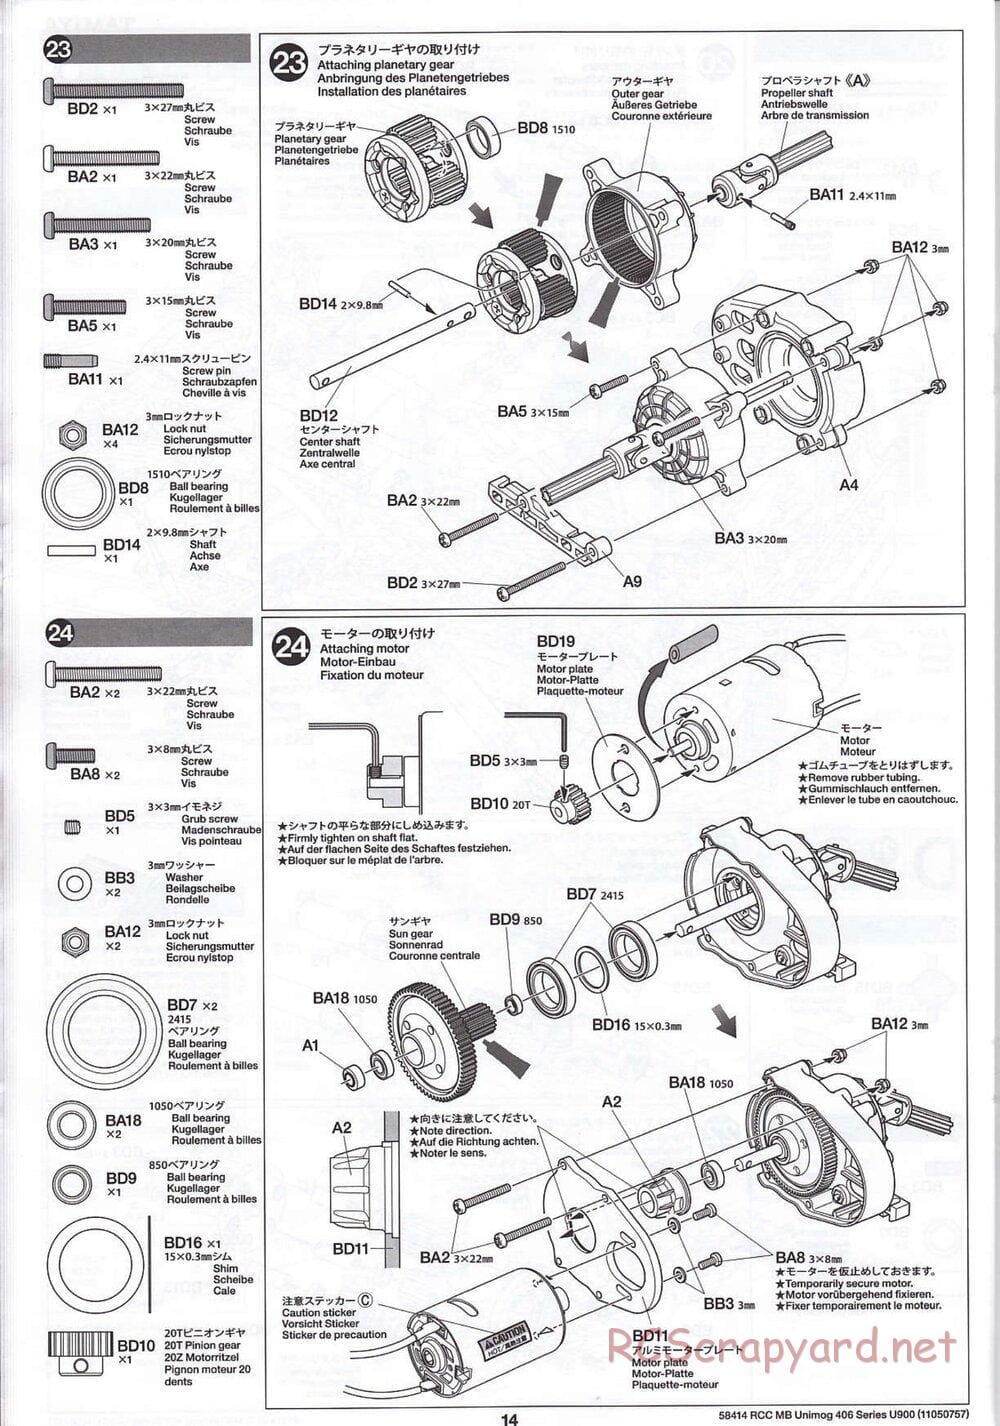 Tamiya - Mercedes-Benz Unimog 406 Series U900 - CR-01 Chassis - Manual - Page 14